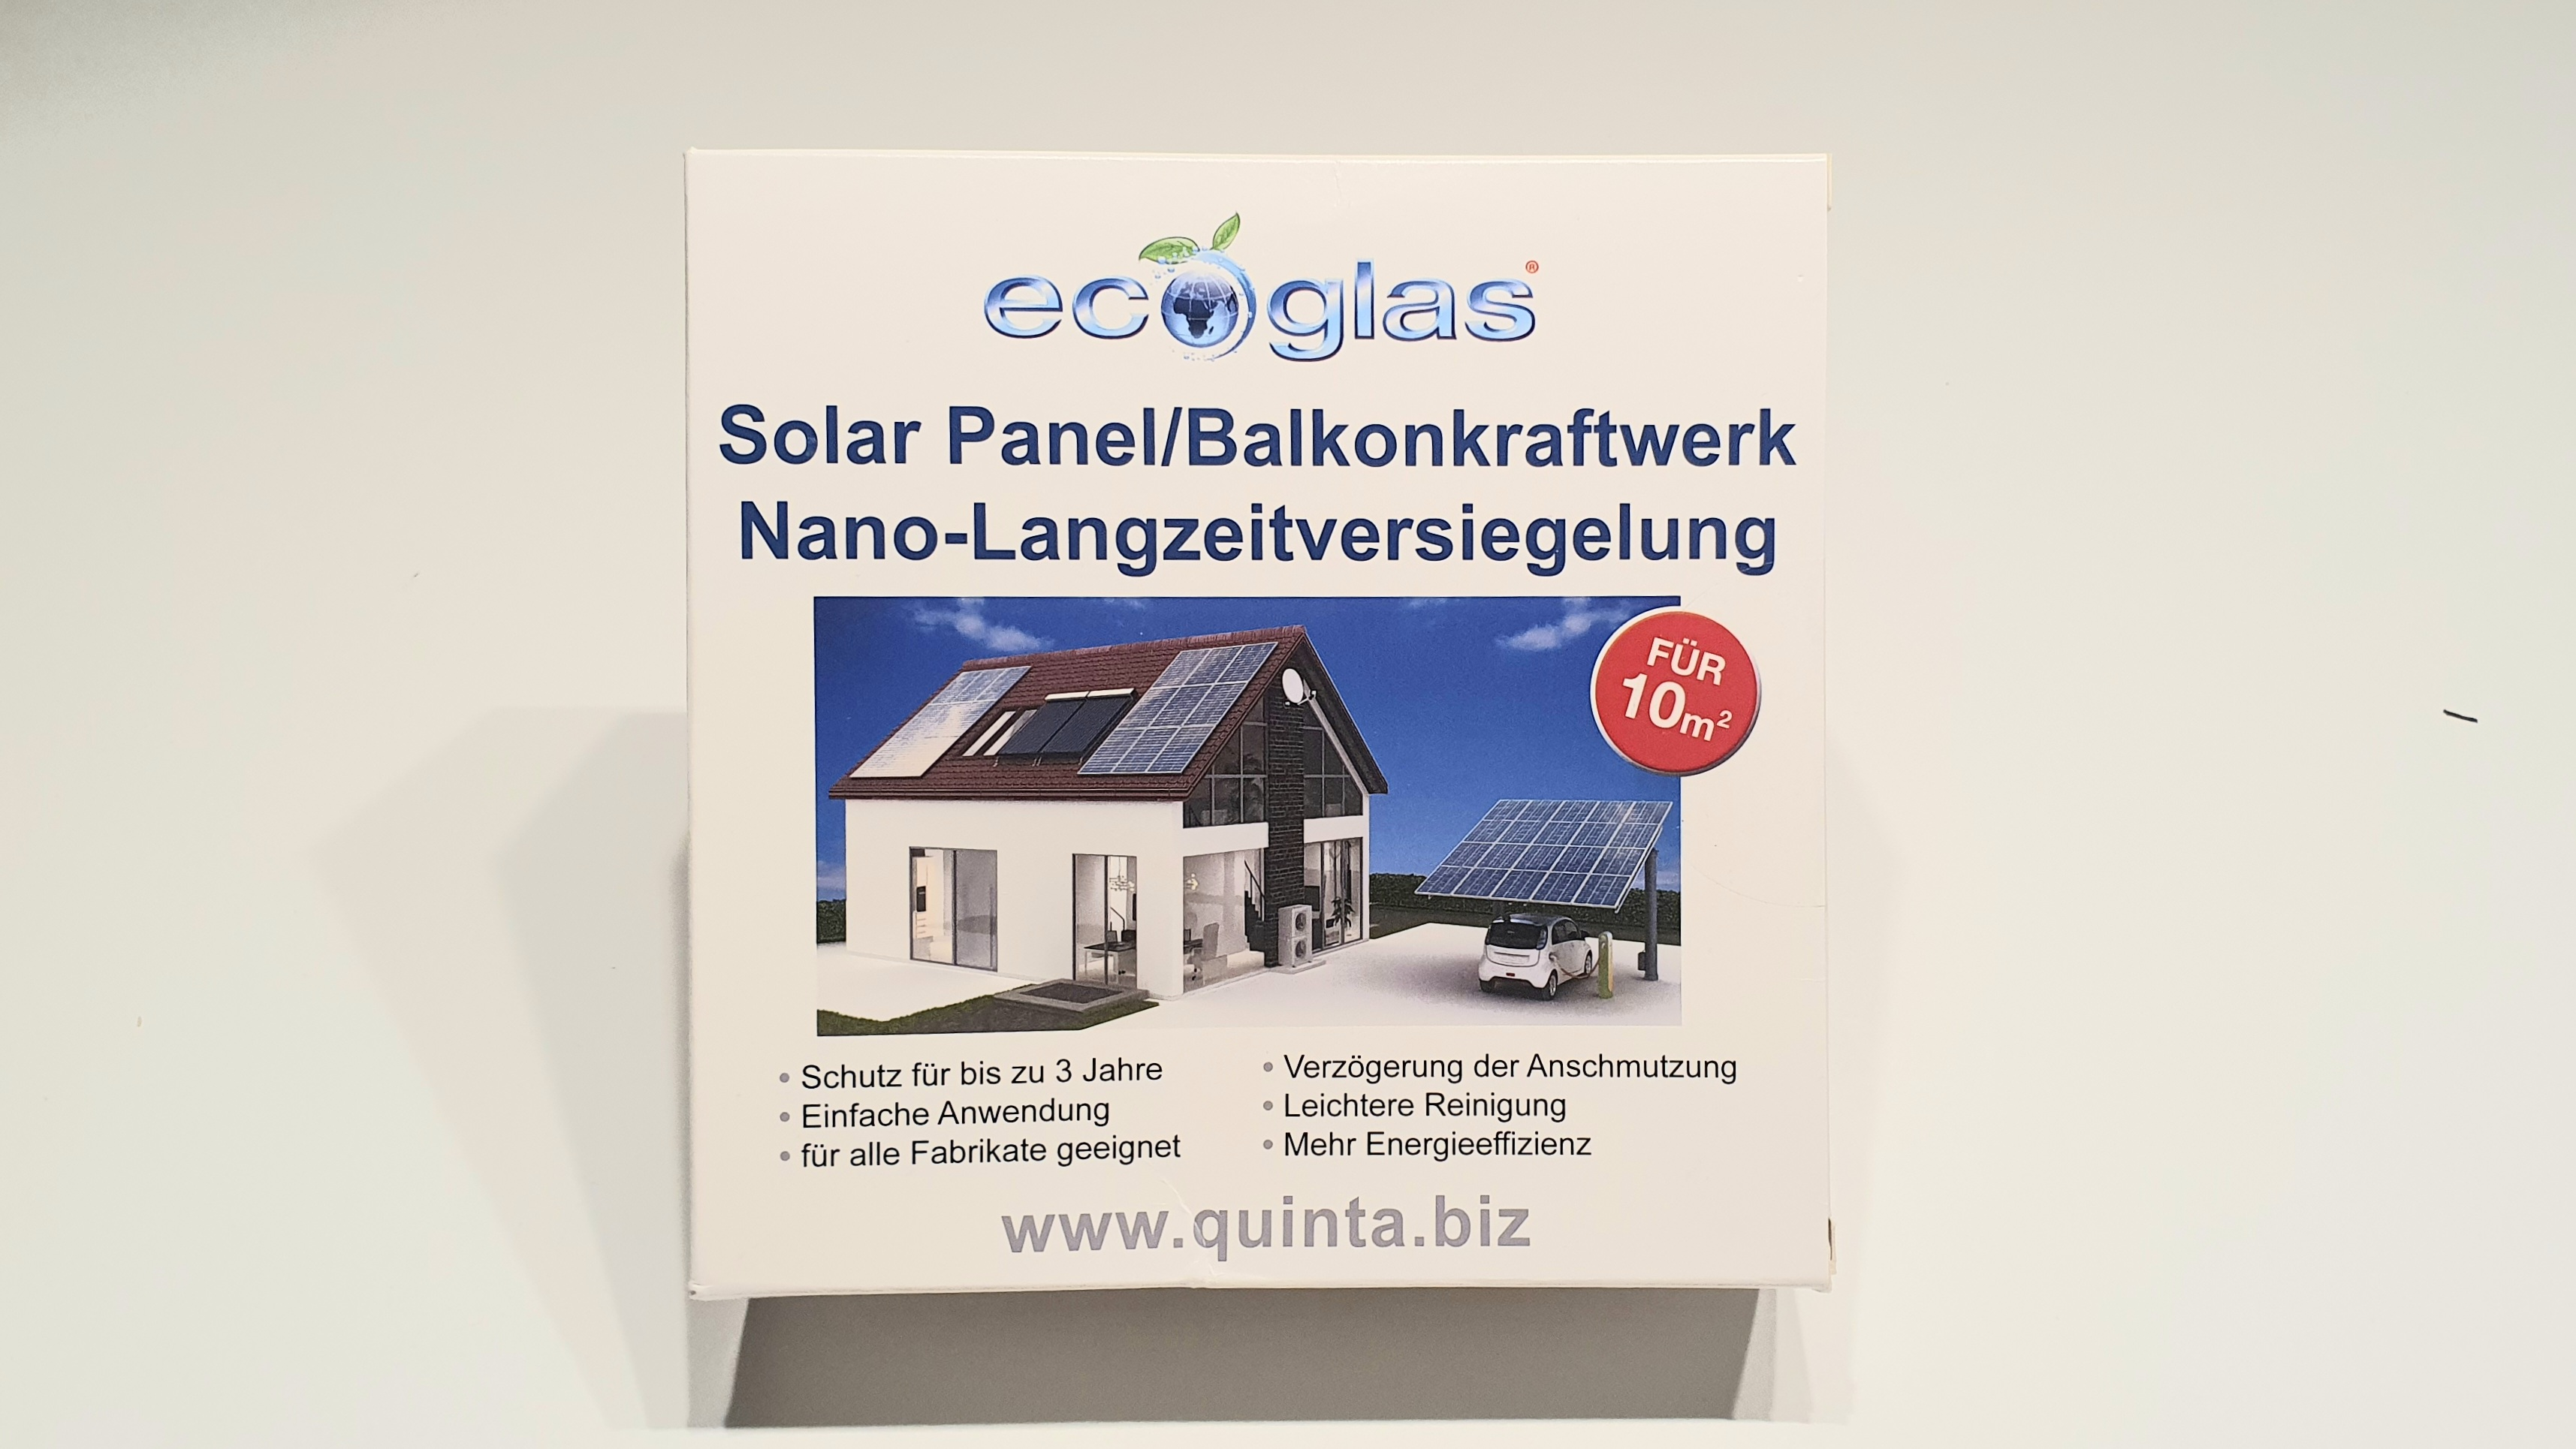 ECOGLAS Langzeit Versiegelung Solarpanel Nano